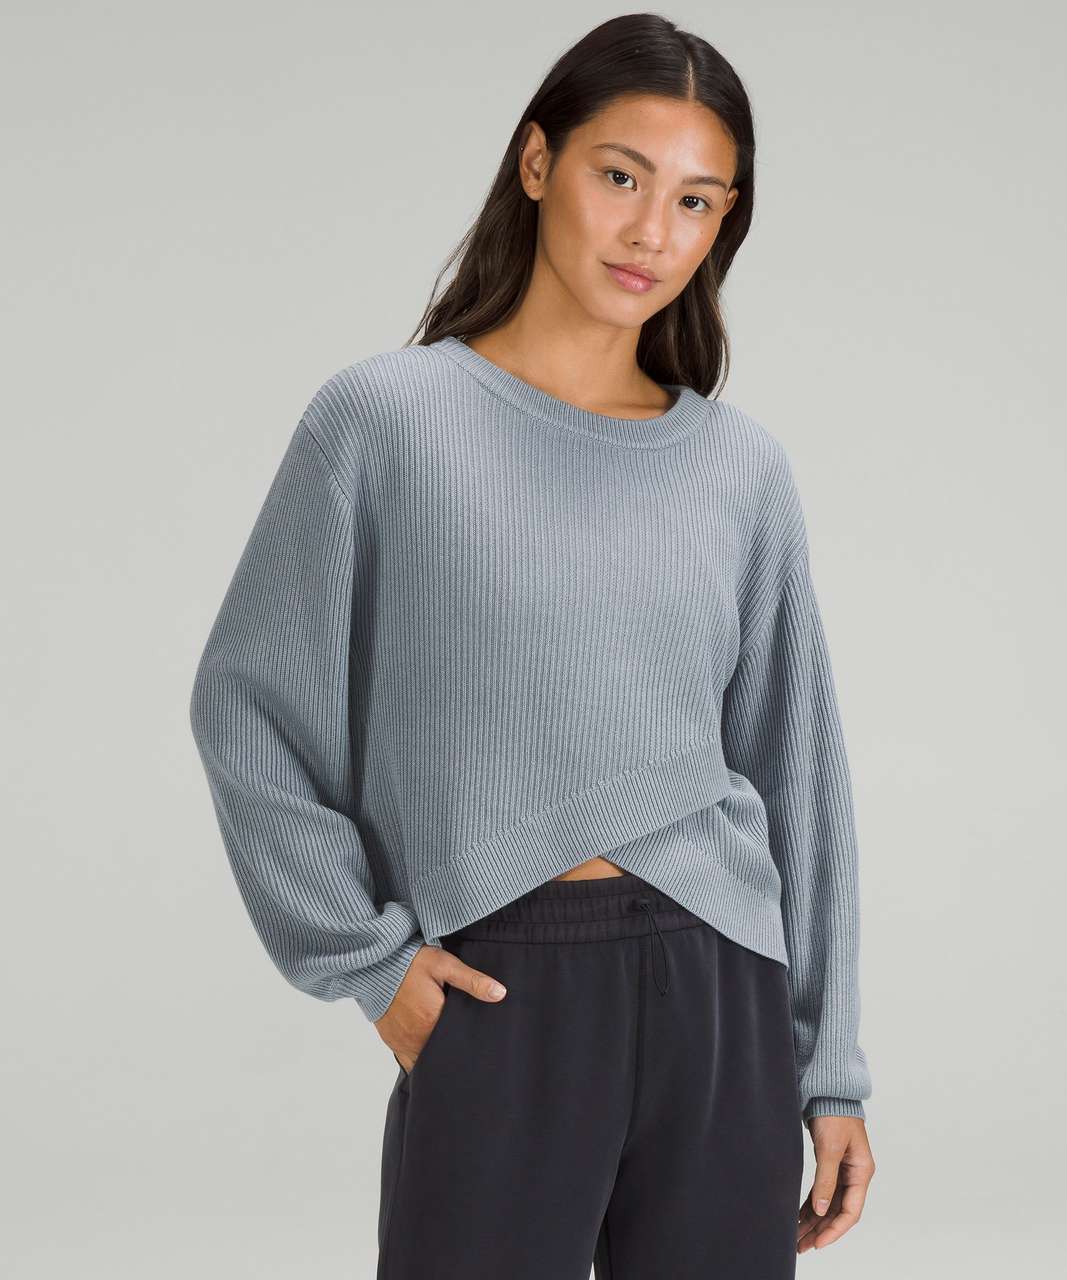 Lululemon Reversible Crossover Sweater - Chambray